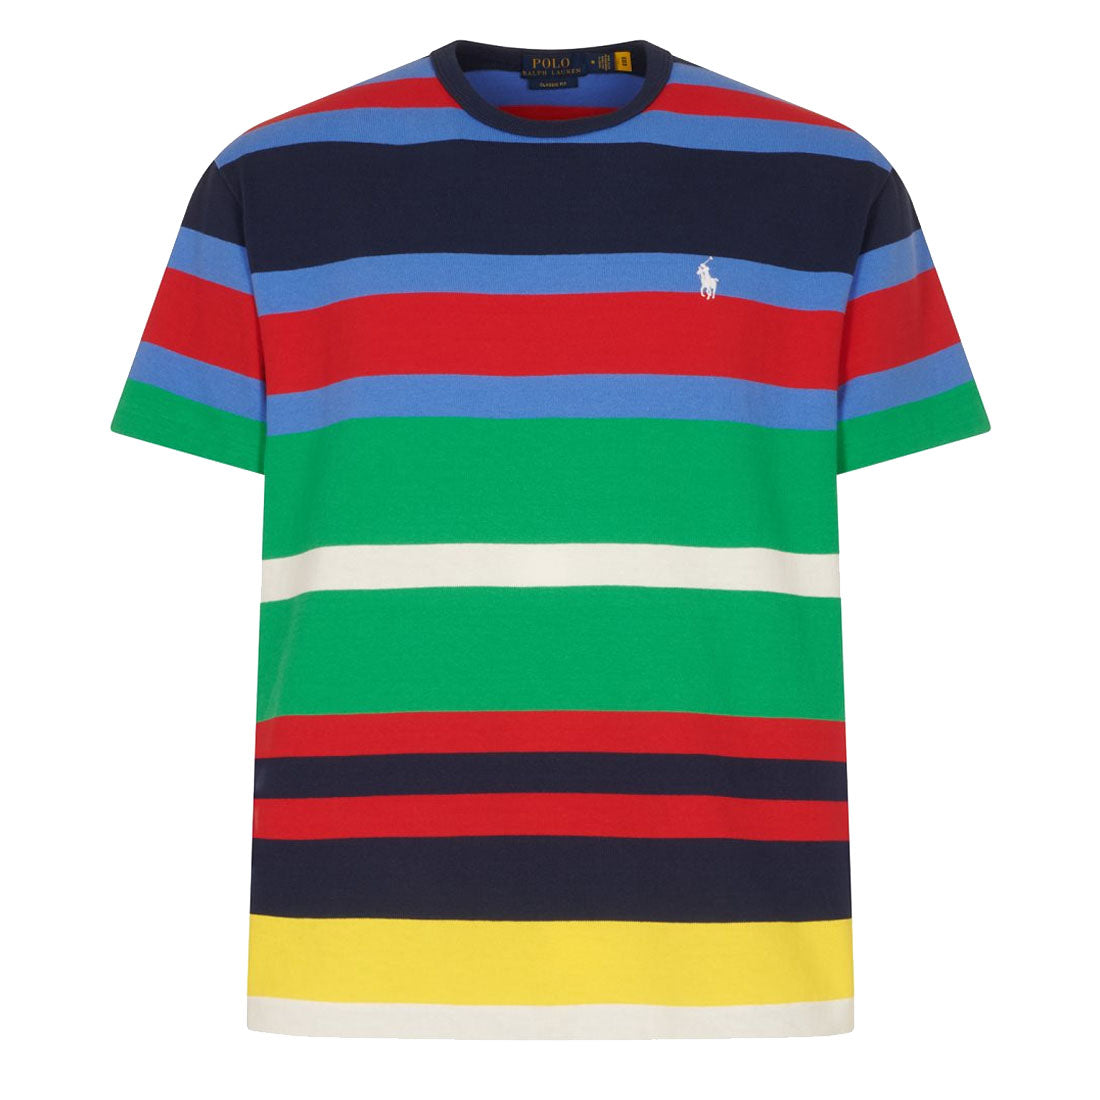 Polo Ralph Lauren Classic Fit Striped Jersey T-Shirt Newport Navy Multi ...